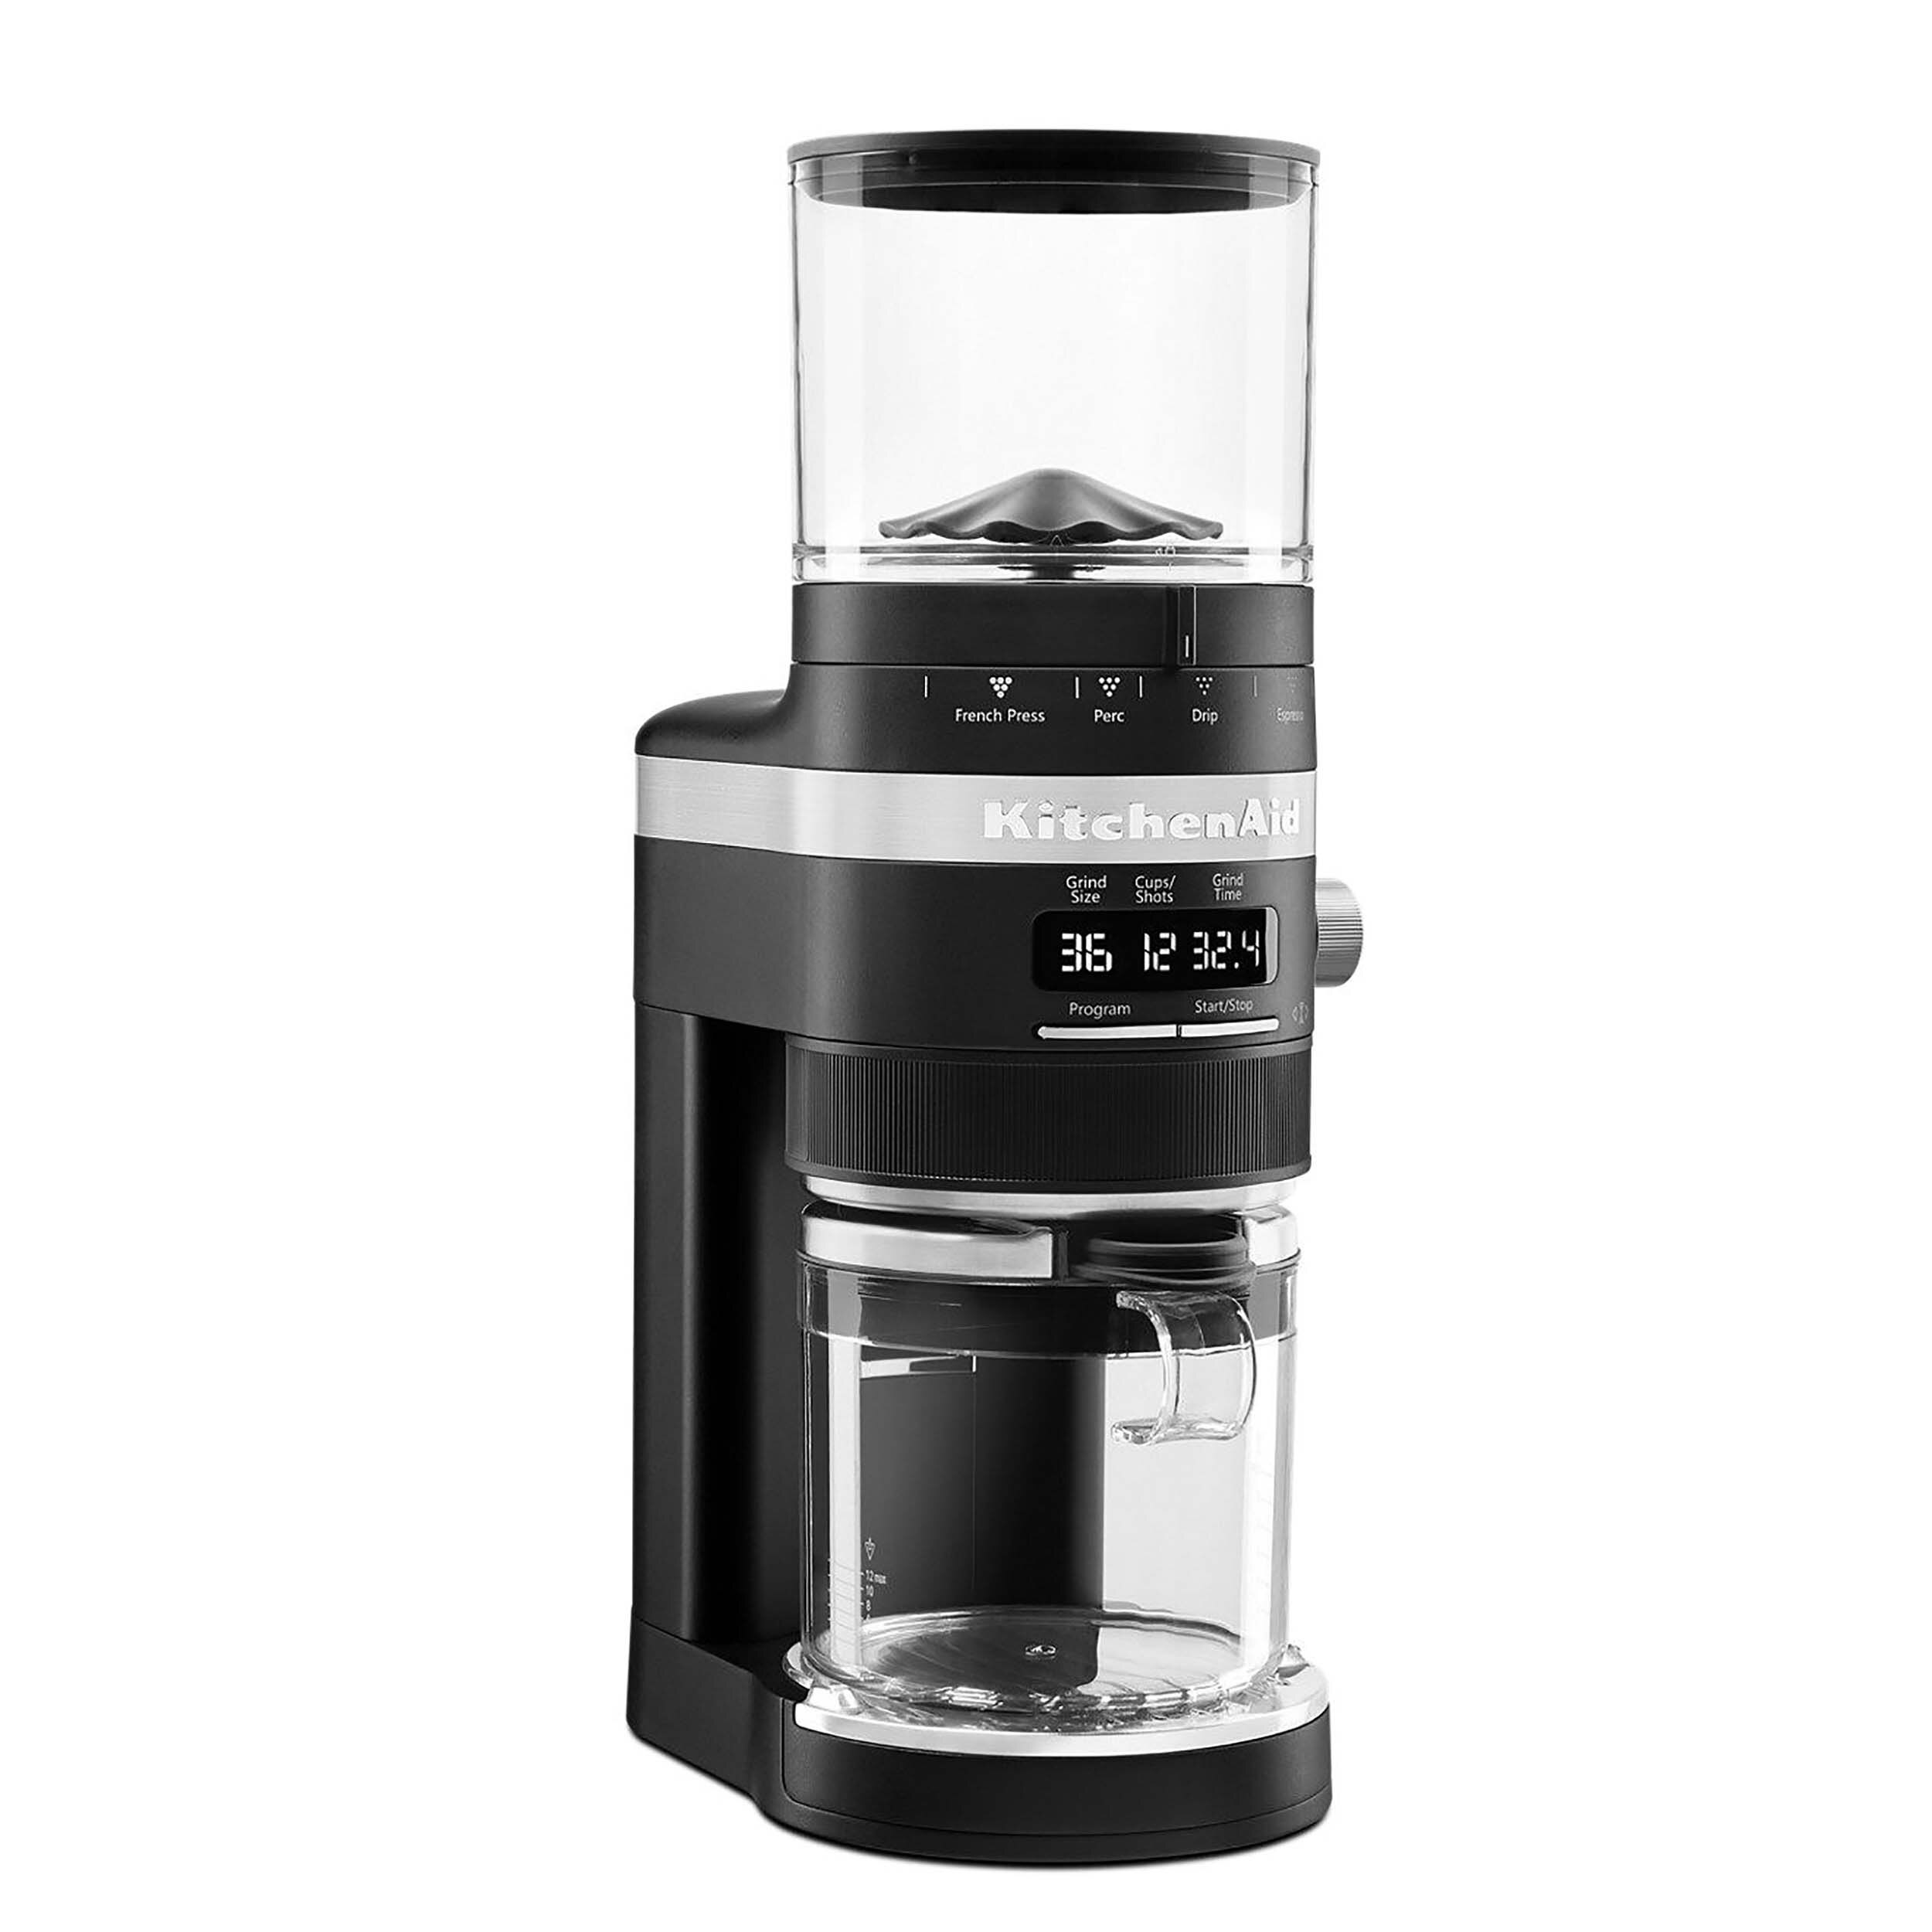 KitchenAid Burr Coffee Grinder, Black Matte, BCG8433 - image 1 of 9